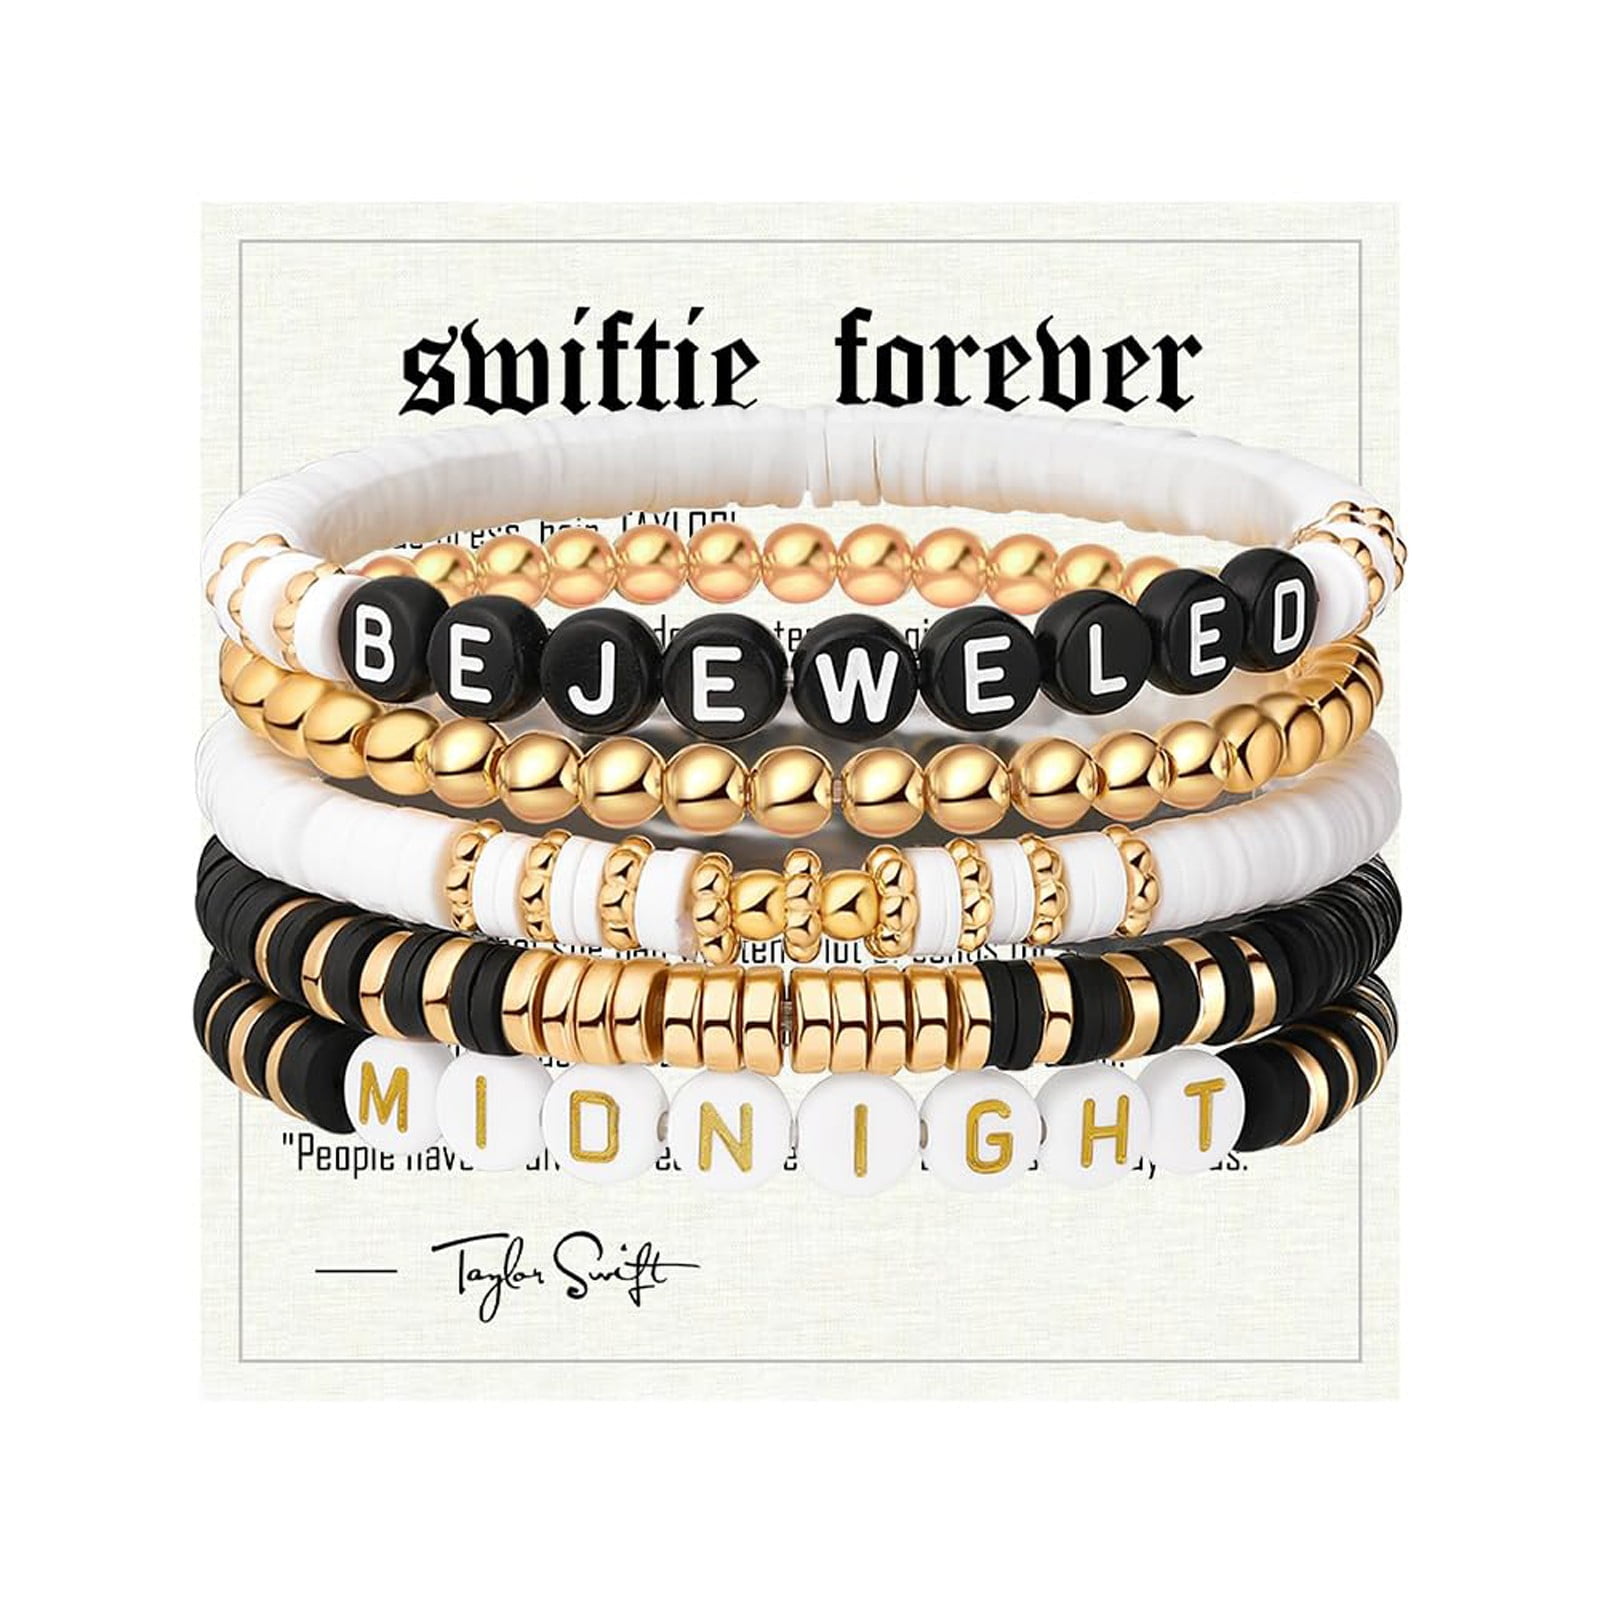 Why do Taylor Swift fans 'make the friendship bracelets?